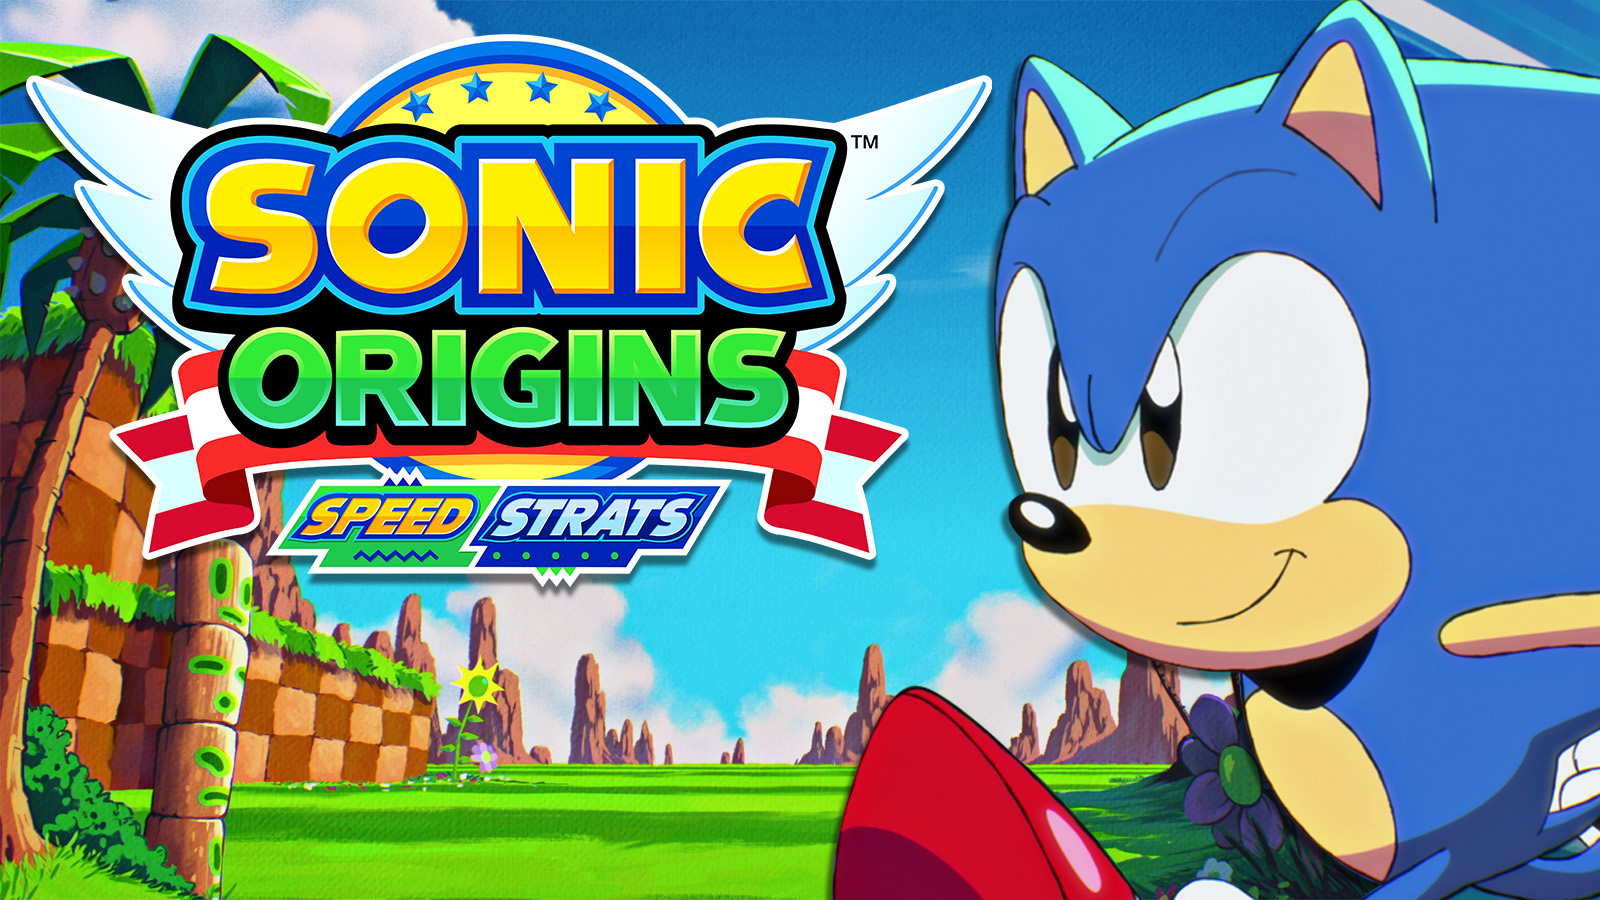 Sonic Origins: Speed Strats -Sonic the Hedgehog